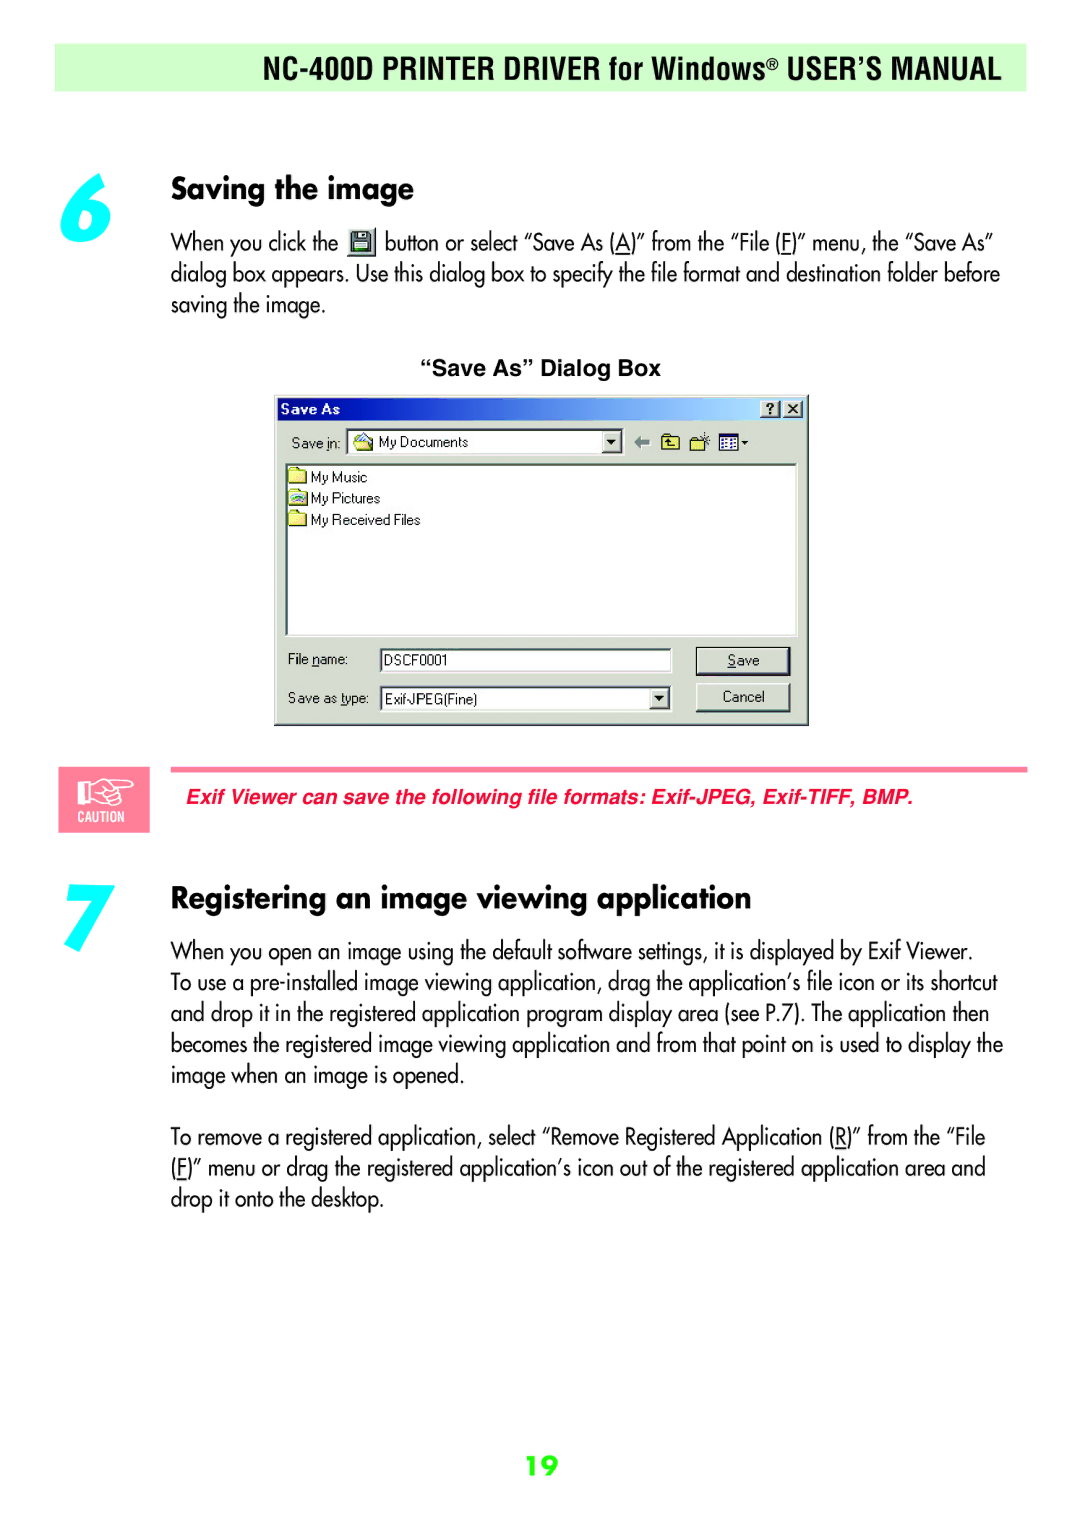 FujiFilm NC-400D user manual Registering an image viewing application, Save As Dialog Box 